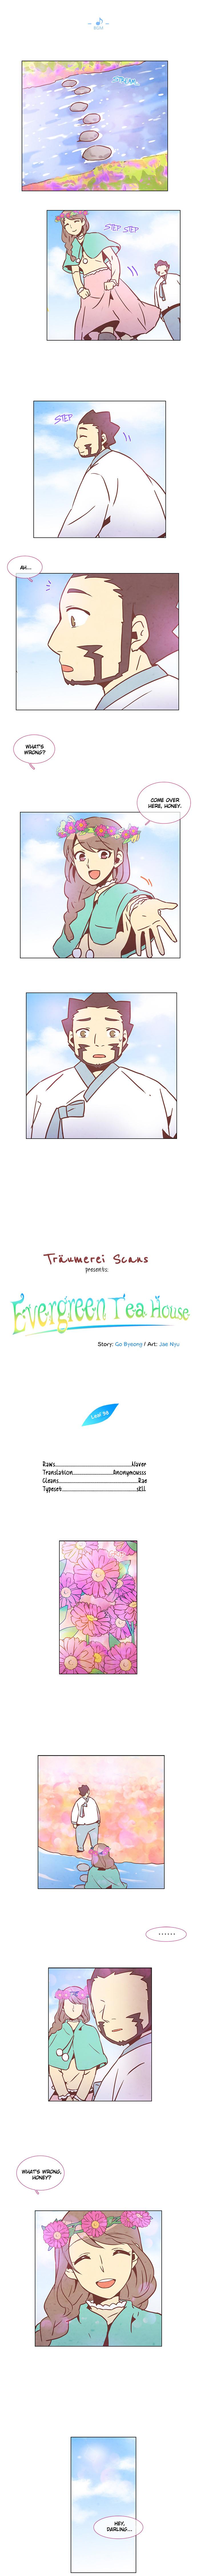 Evergreen Tea Shop - episode 98 - 0